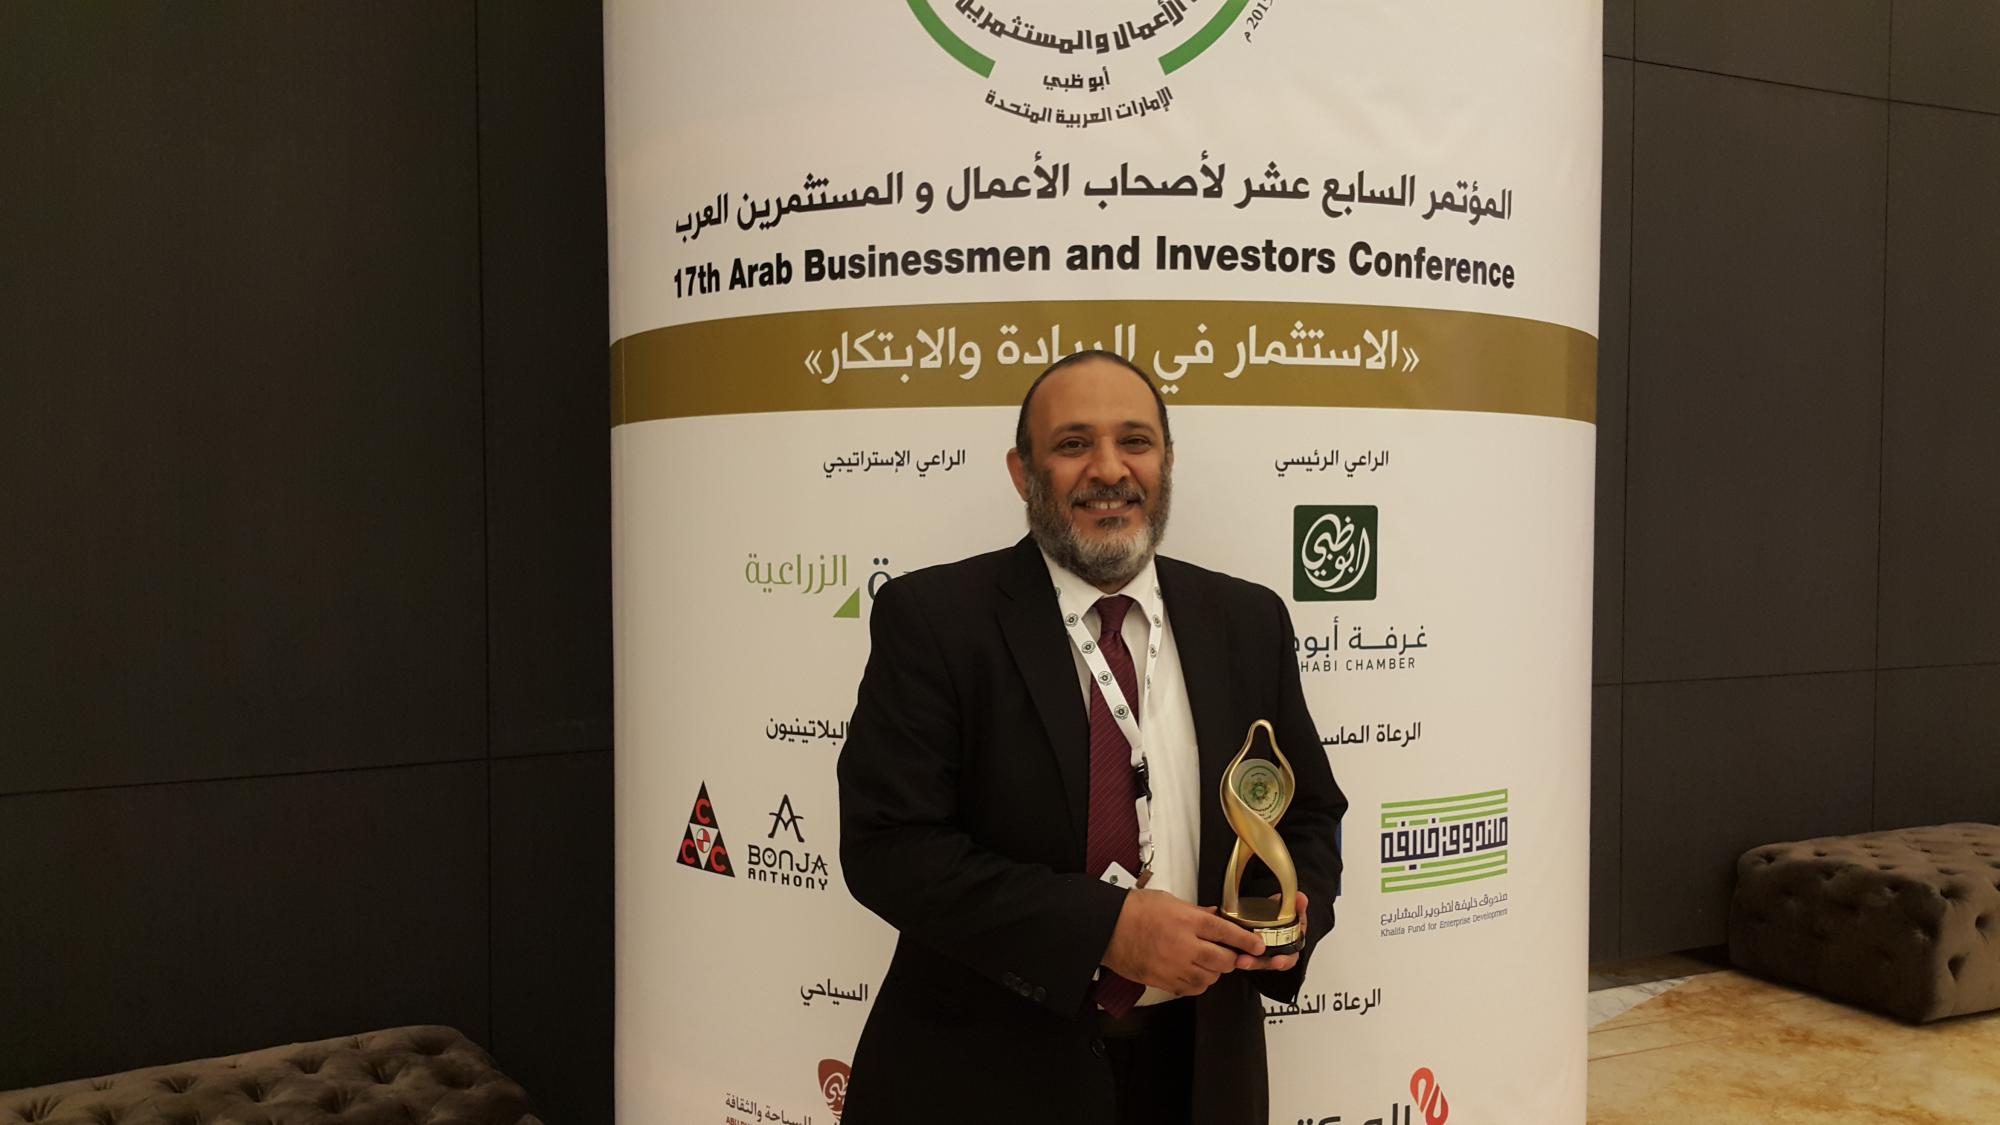 Hassan Azzazy received the Arab Innovation and Entrepreneurship Award in Abu Dhabi